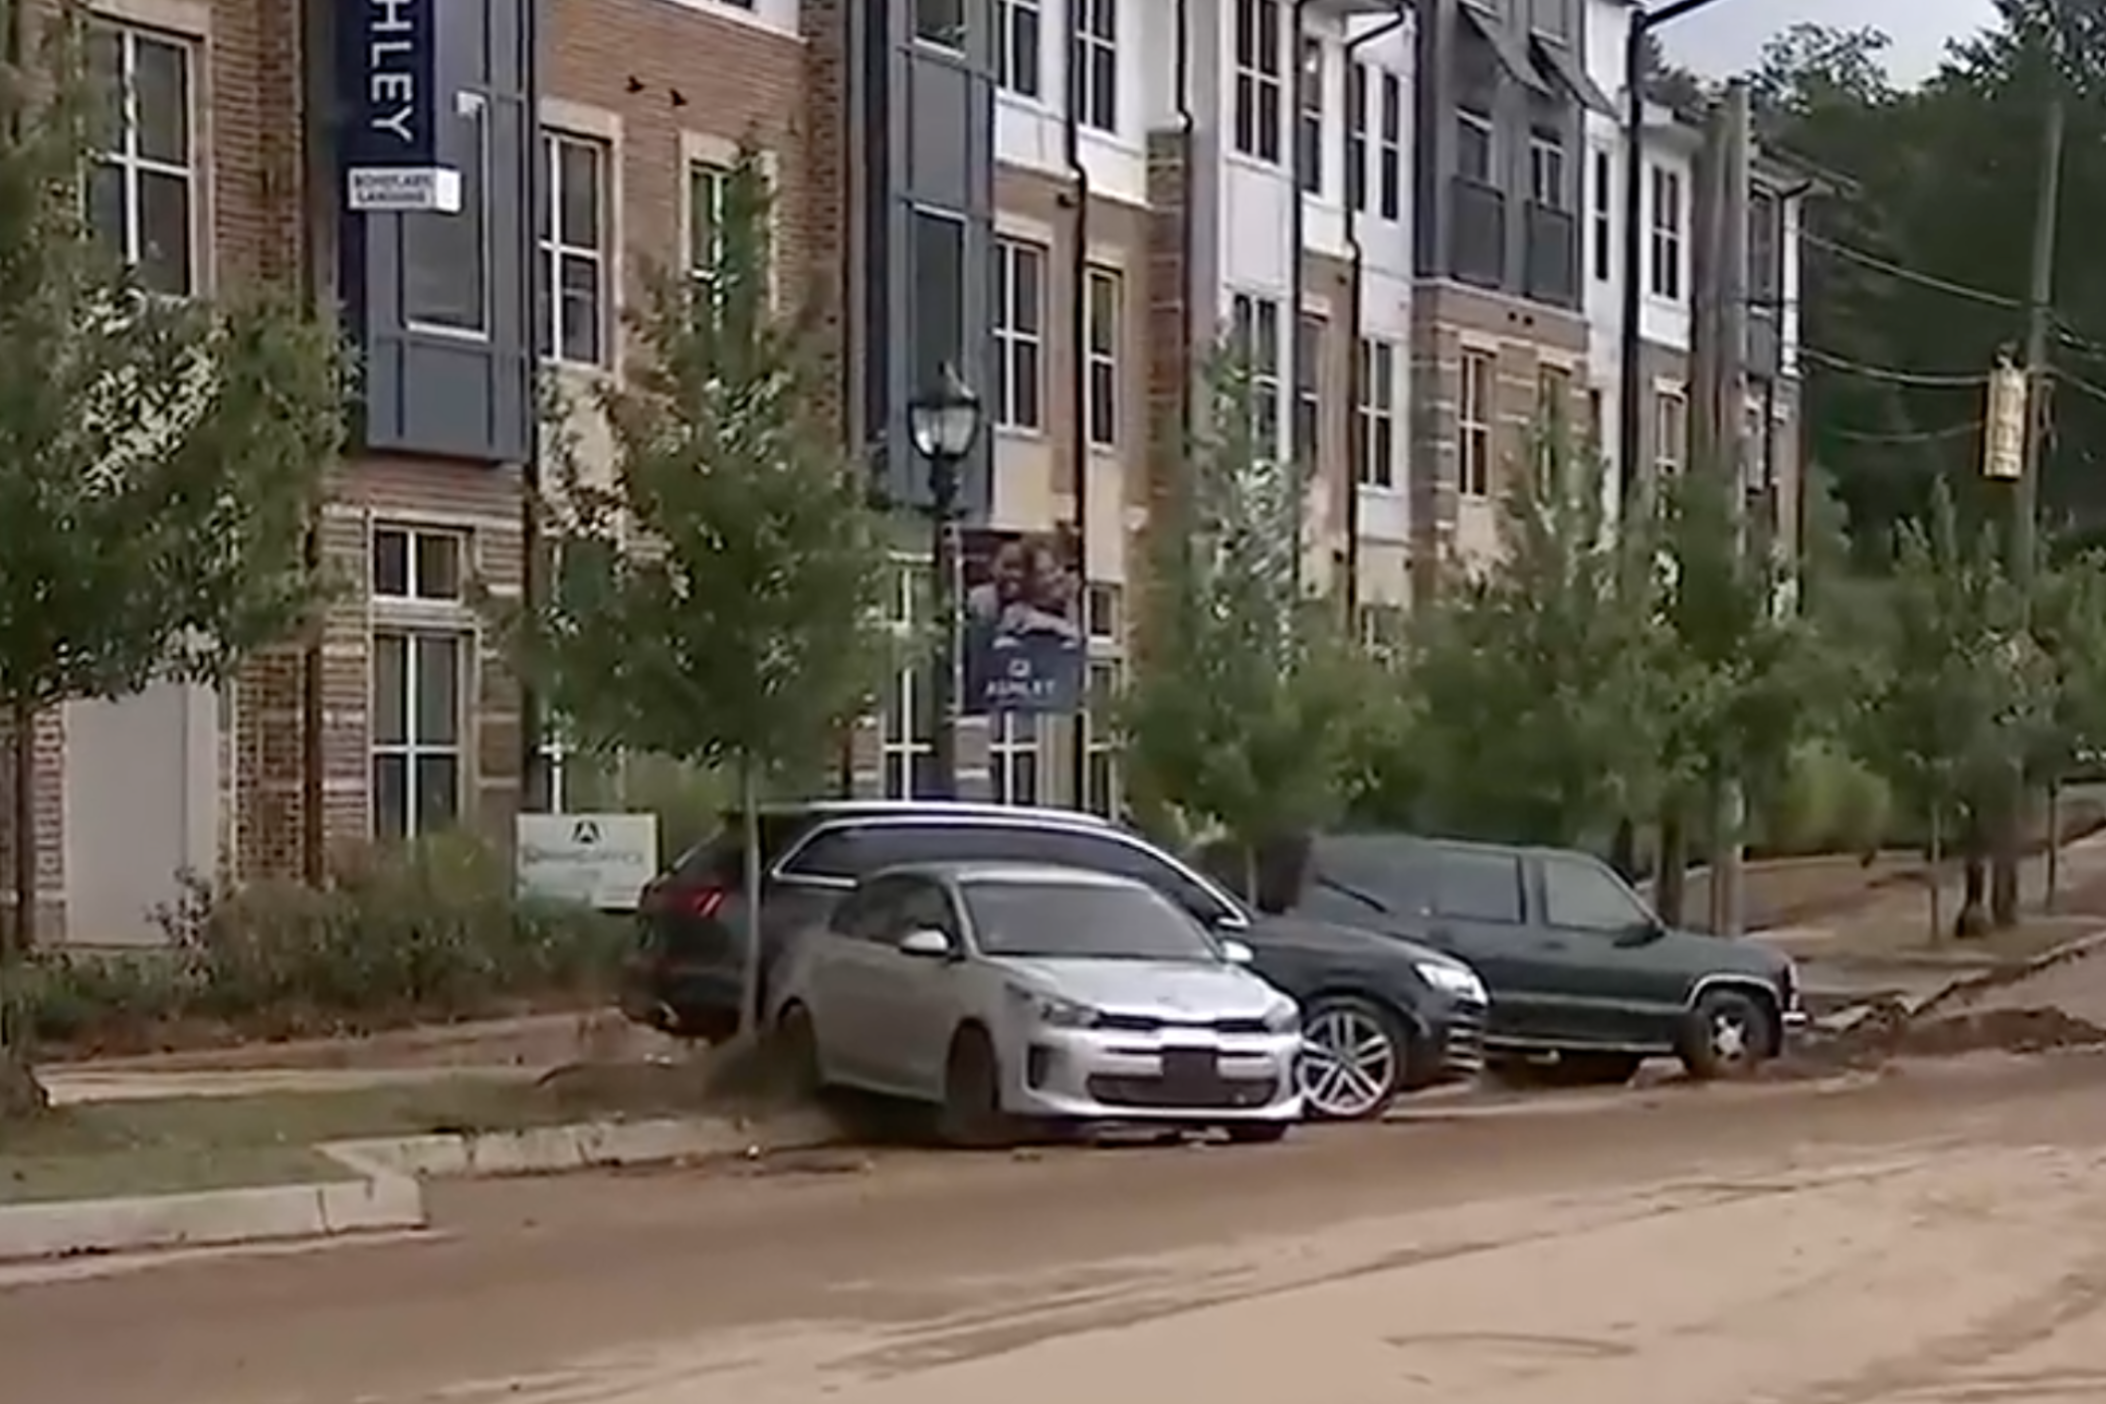 Flooding at Clark Atlanta University, Videos